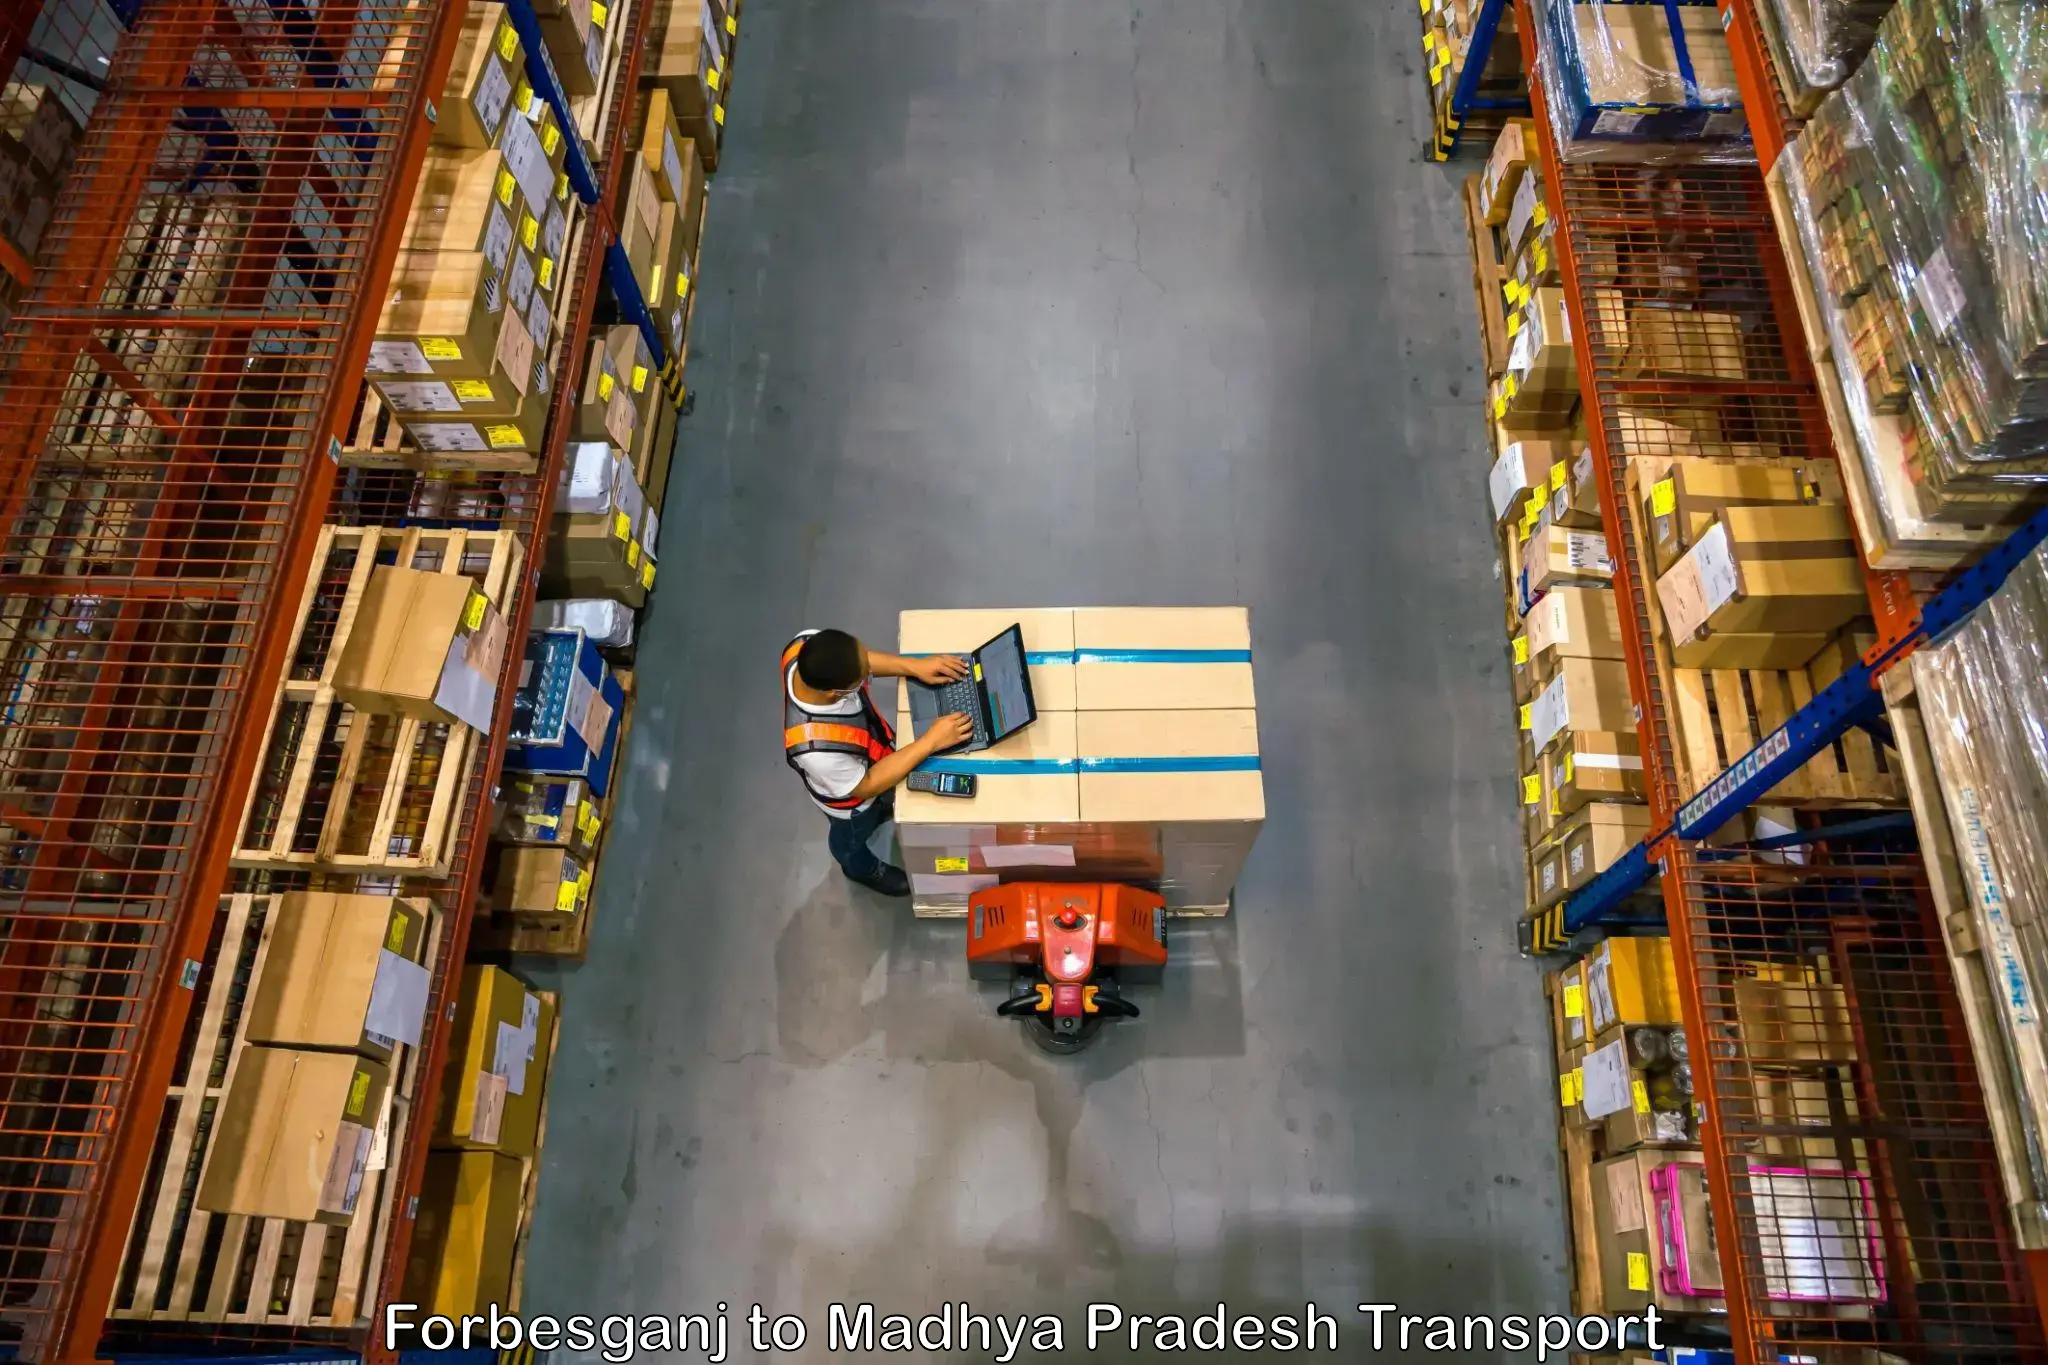 Truck transport companies in India Forbesganj to Ashoknagar